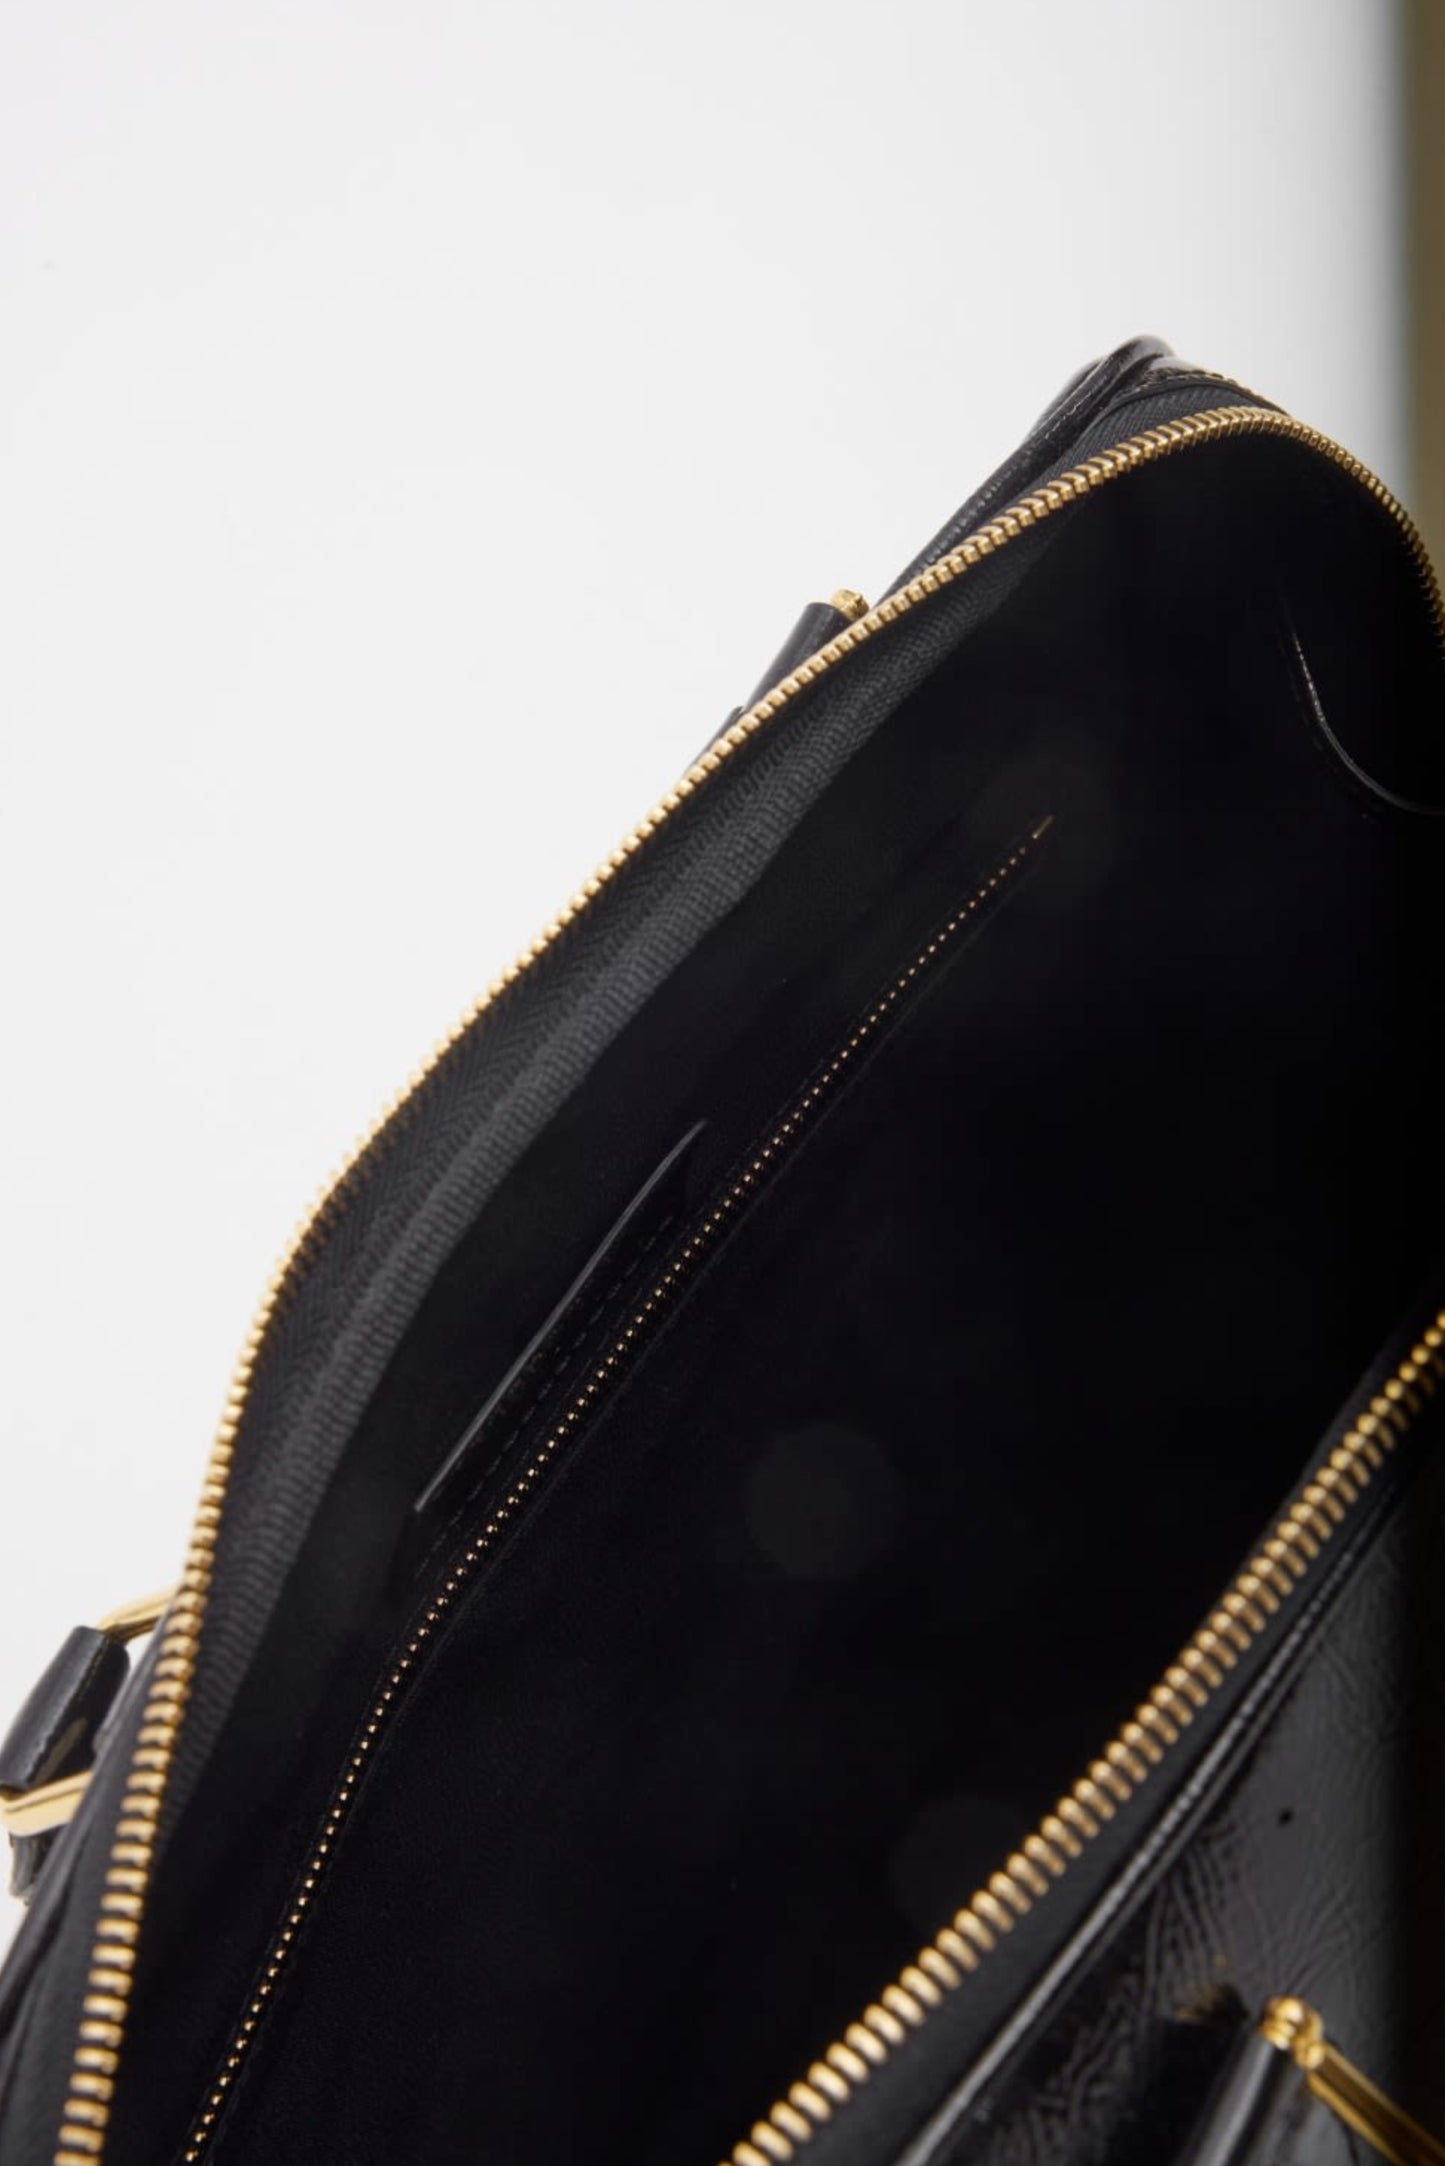 Croco Texture Leather Tote Handbag Black Large